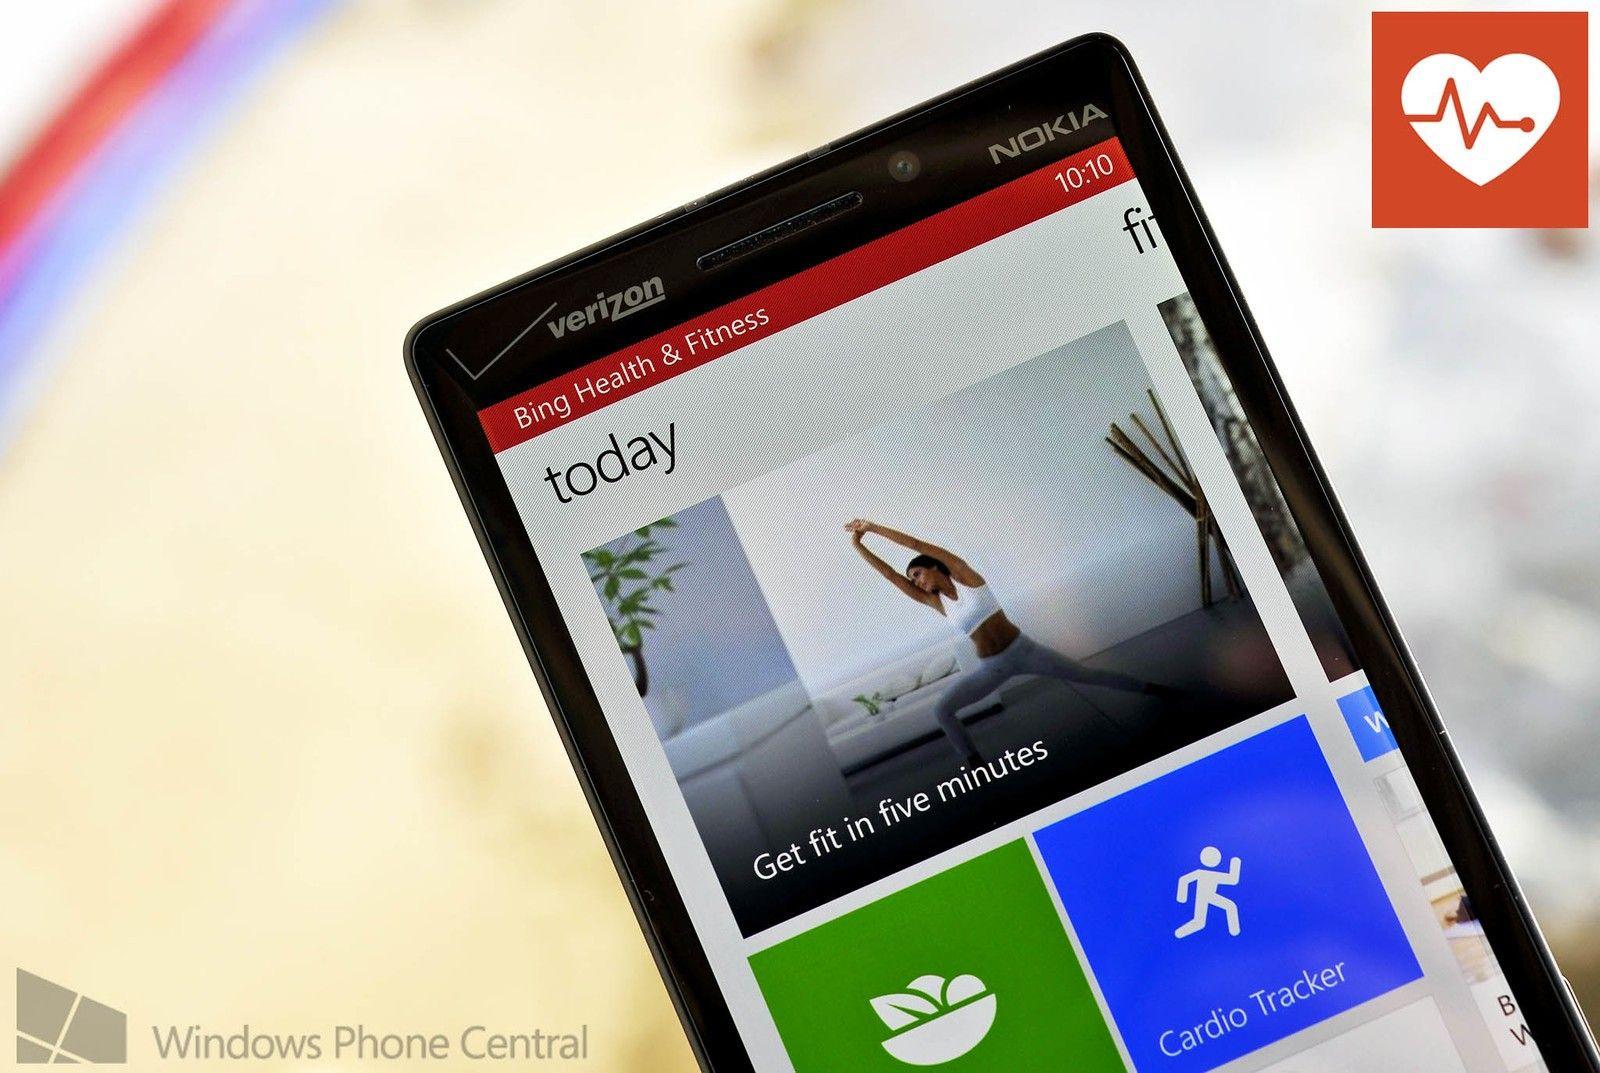 Bing Health Logo - Bing Health & Fitness beta released for Windows Phone, helps keep ...